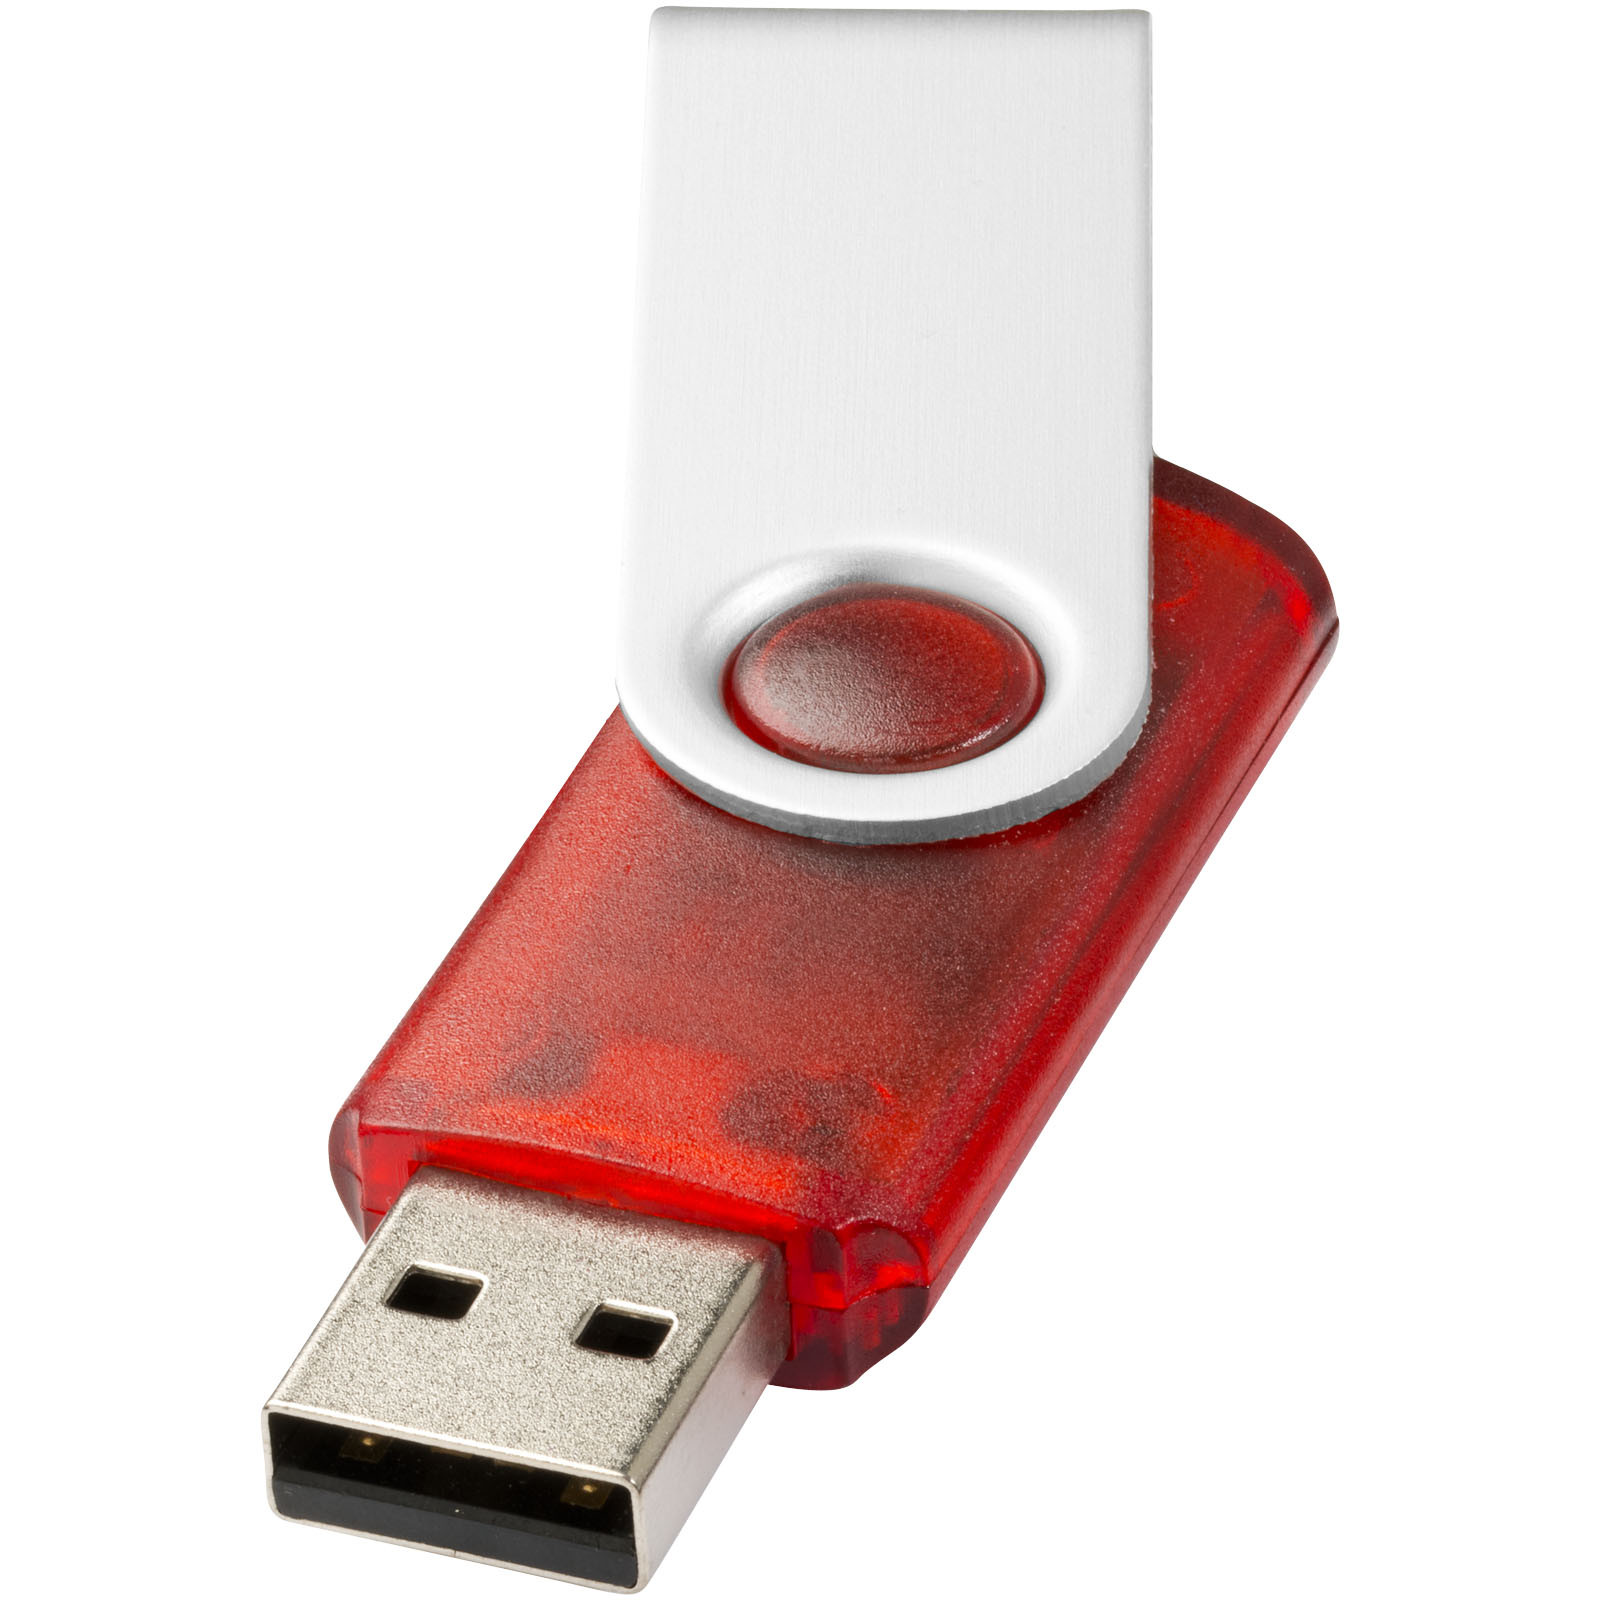 Chiavetta USB Rotate-translucent da 2 GB